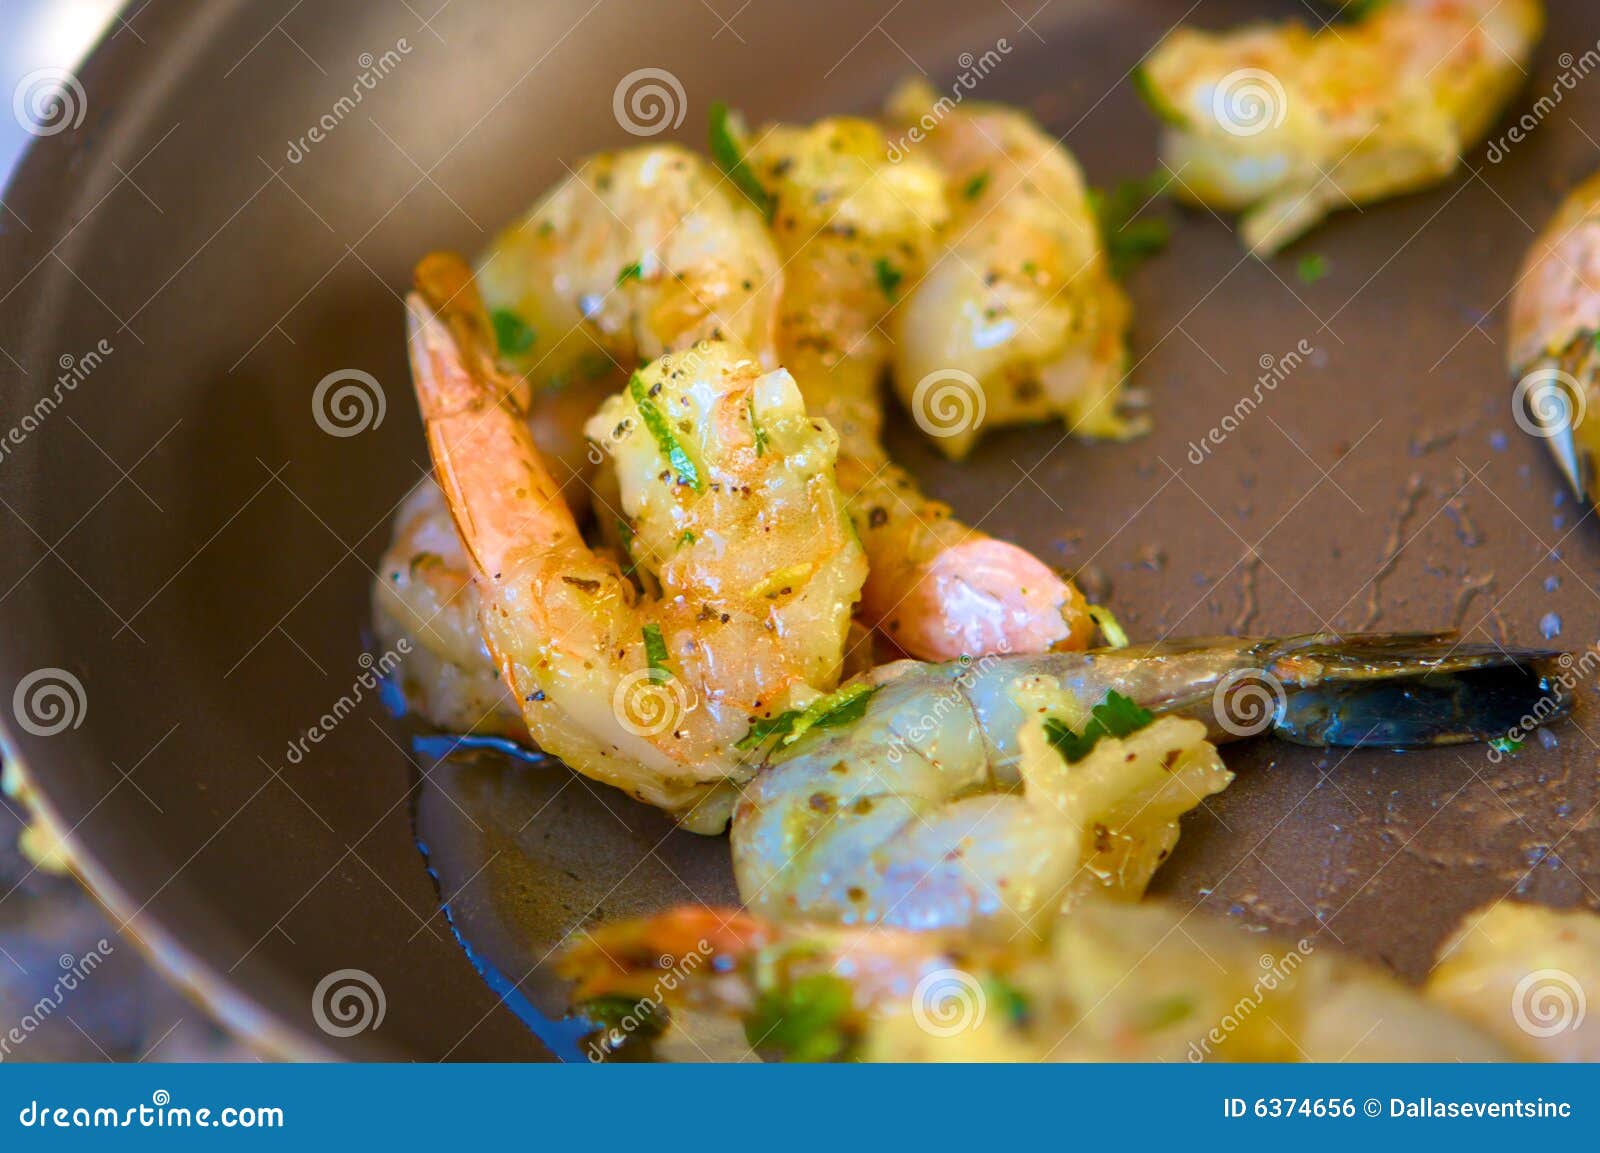 decadent sauteed shrimp